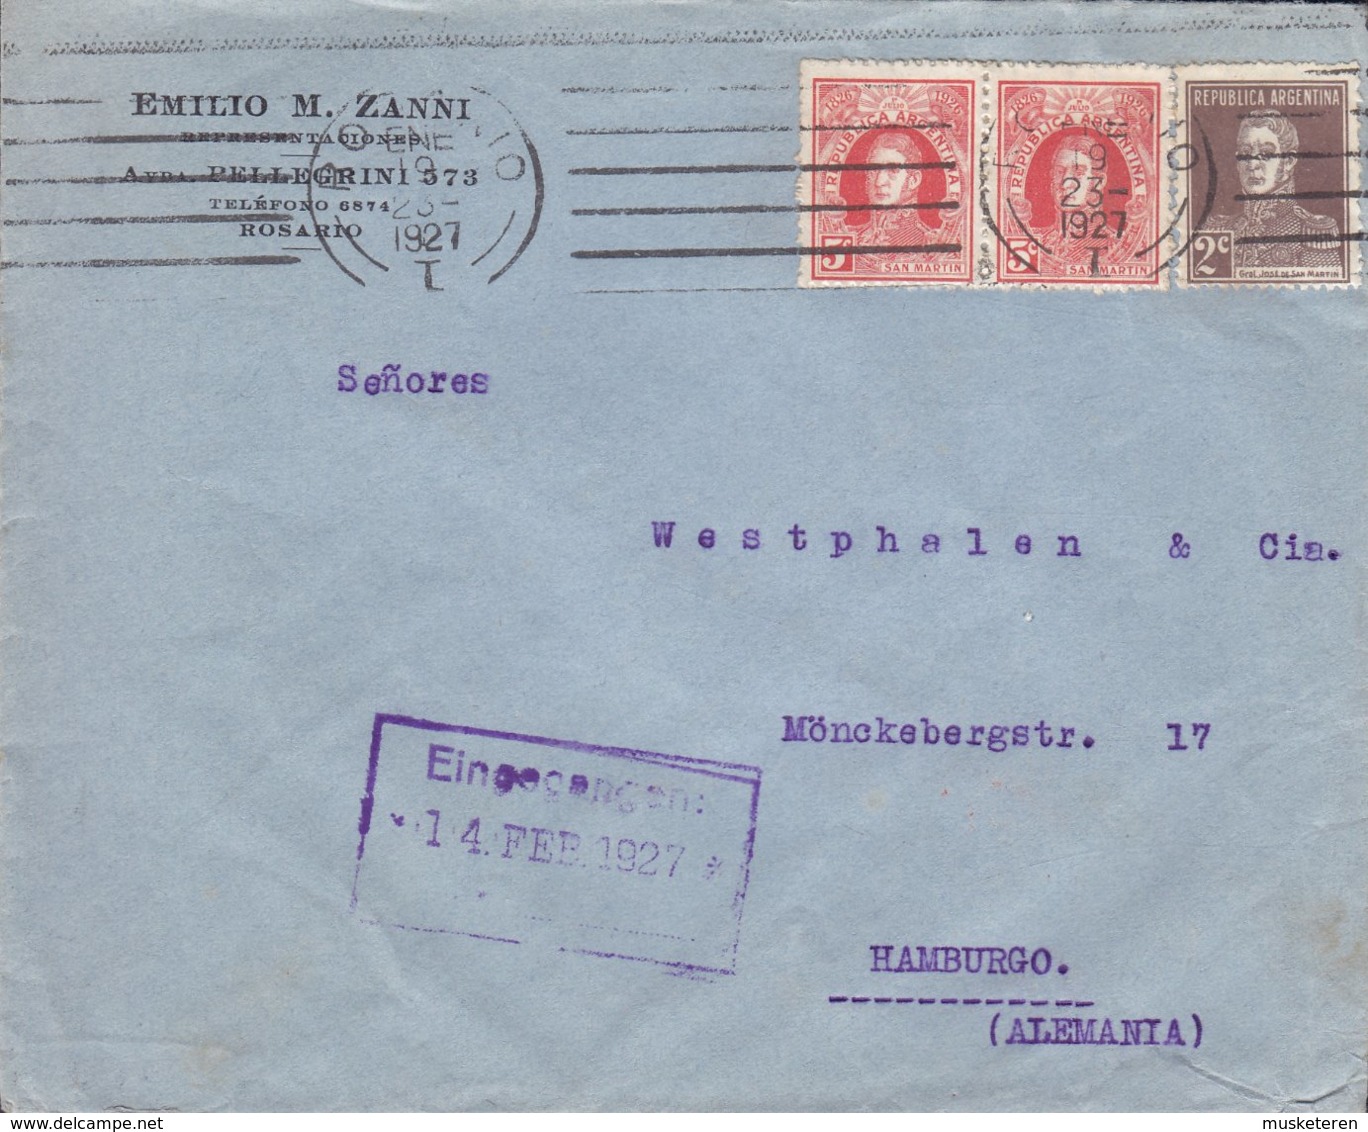 Argentina EMILIO M. ZANNI Representaciones, TMS Cds. ROSARIO 1927 Cover Letra HAMBURG Alemania Germany - Briefe U. Dokumente